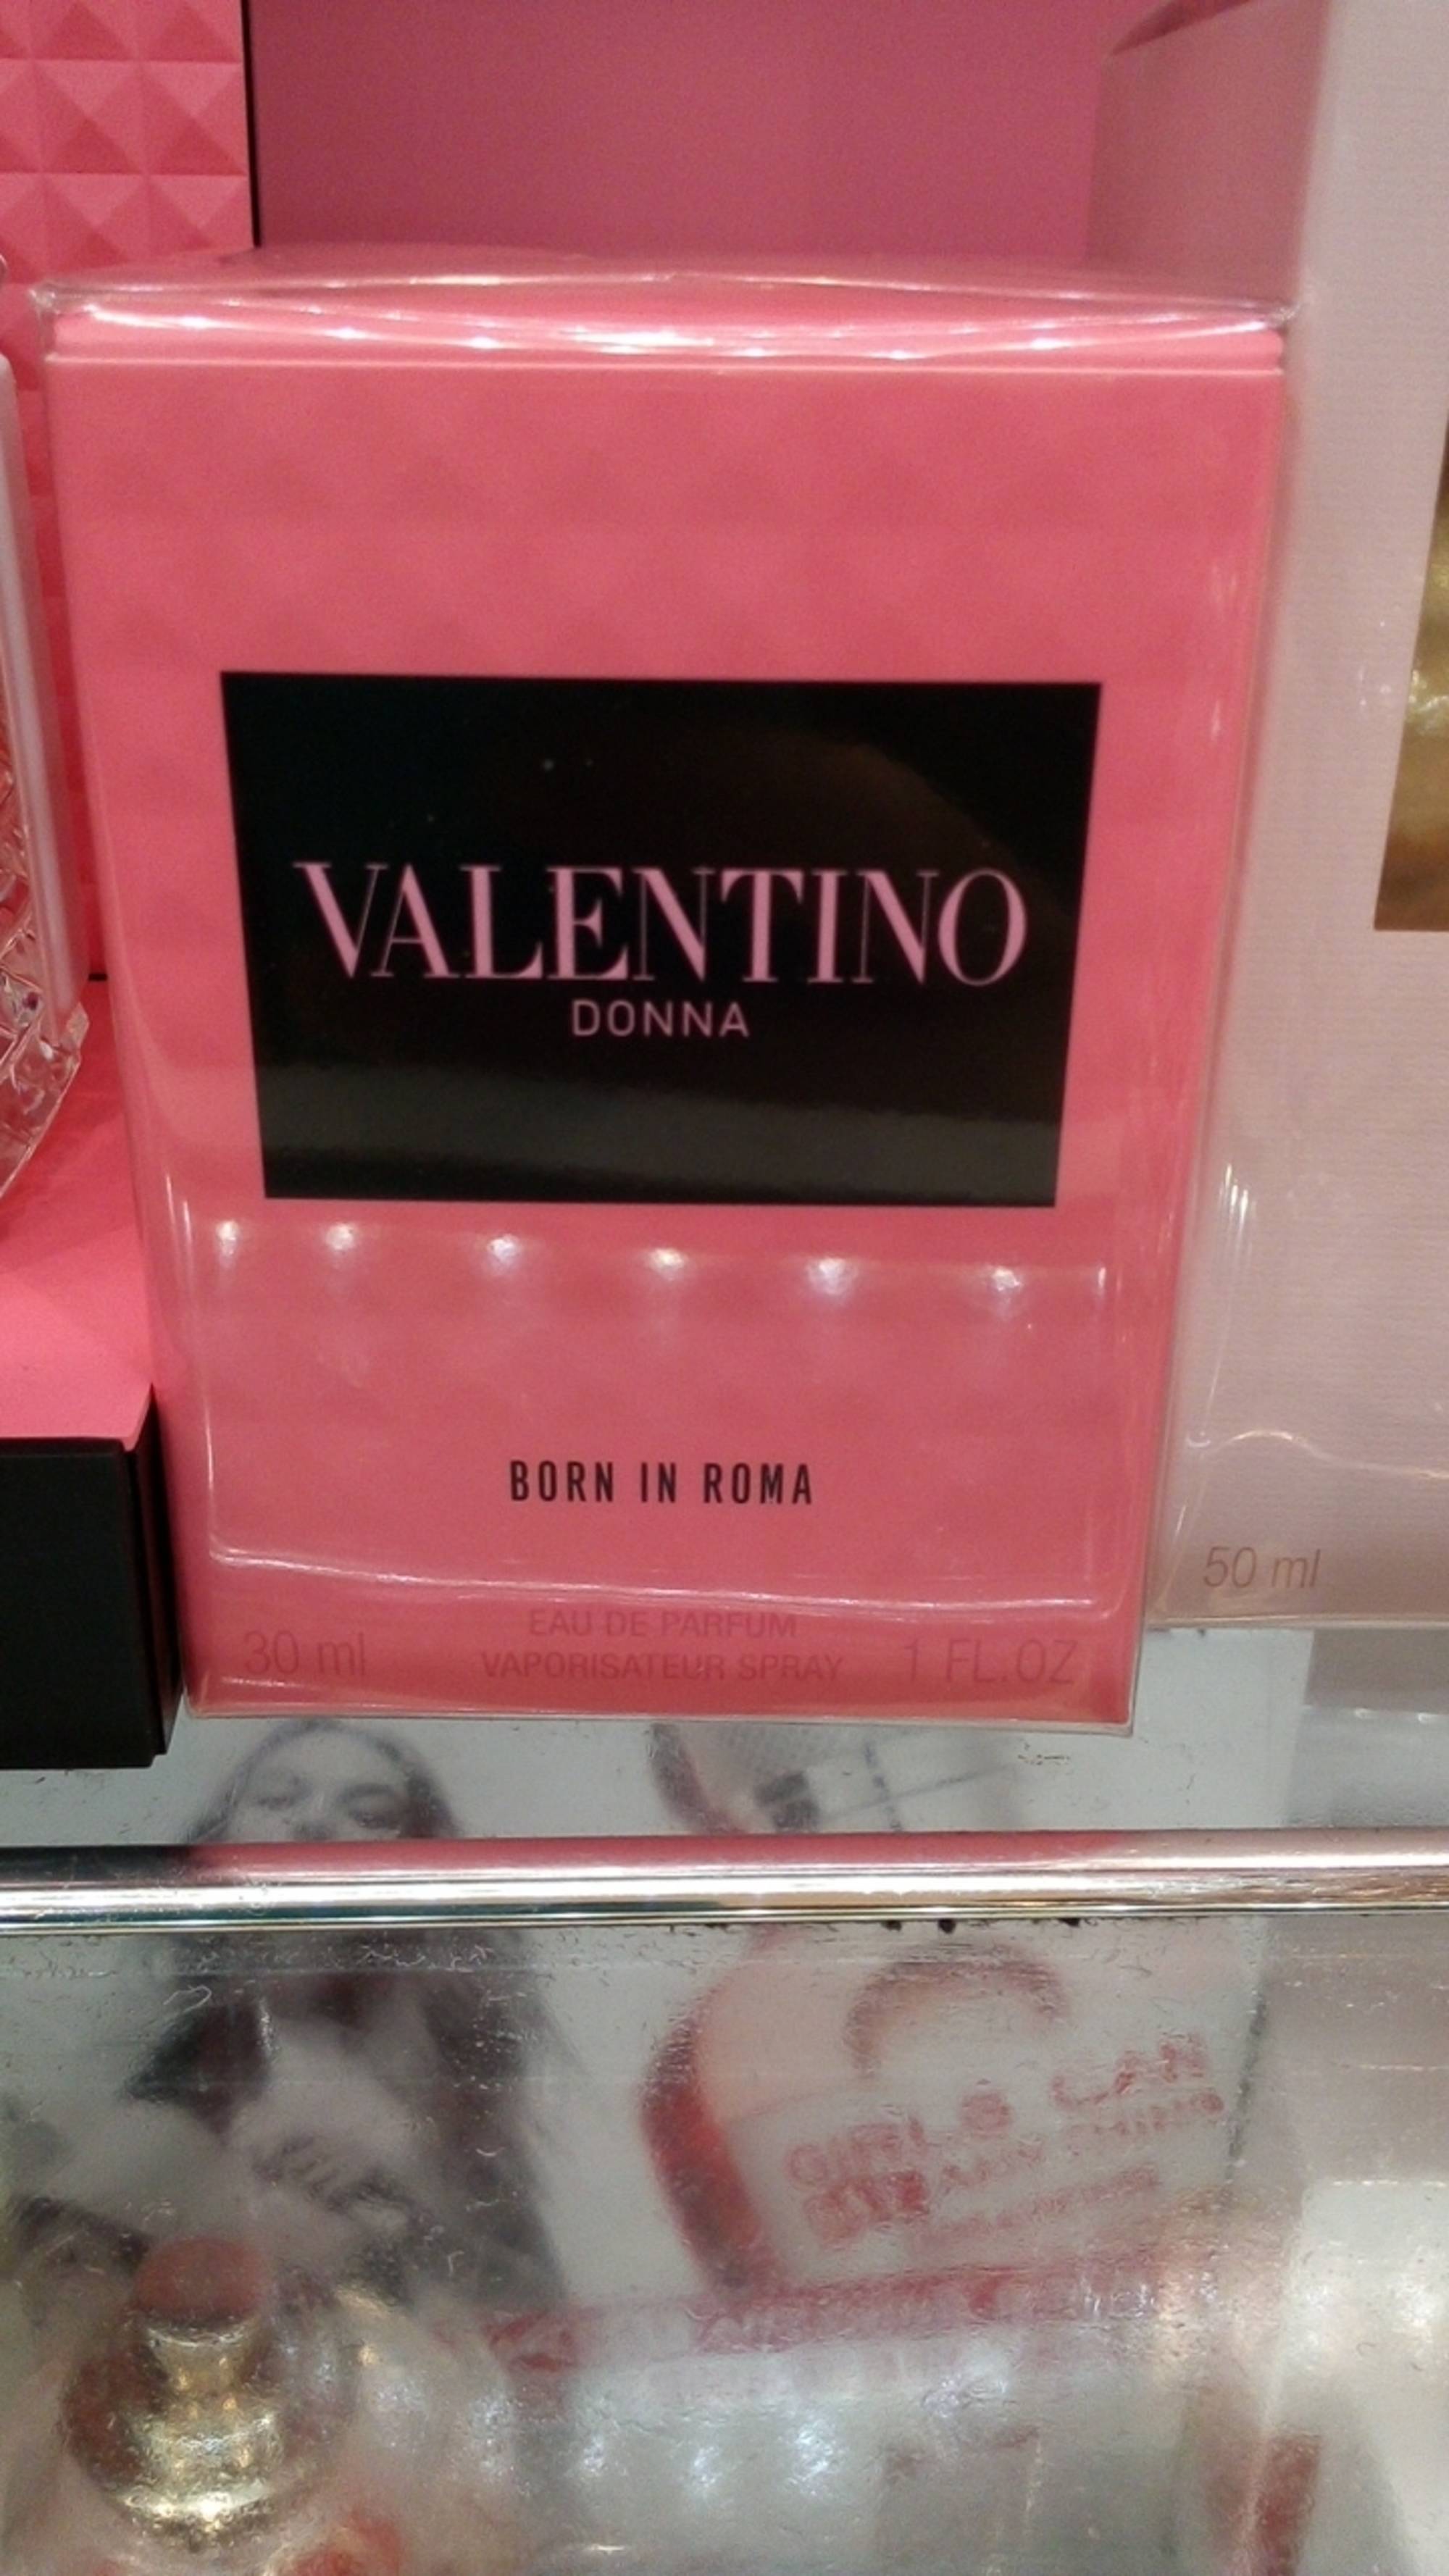 VALENTINO - Donna born in roma - Eau de parfum